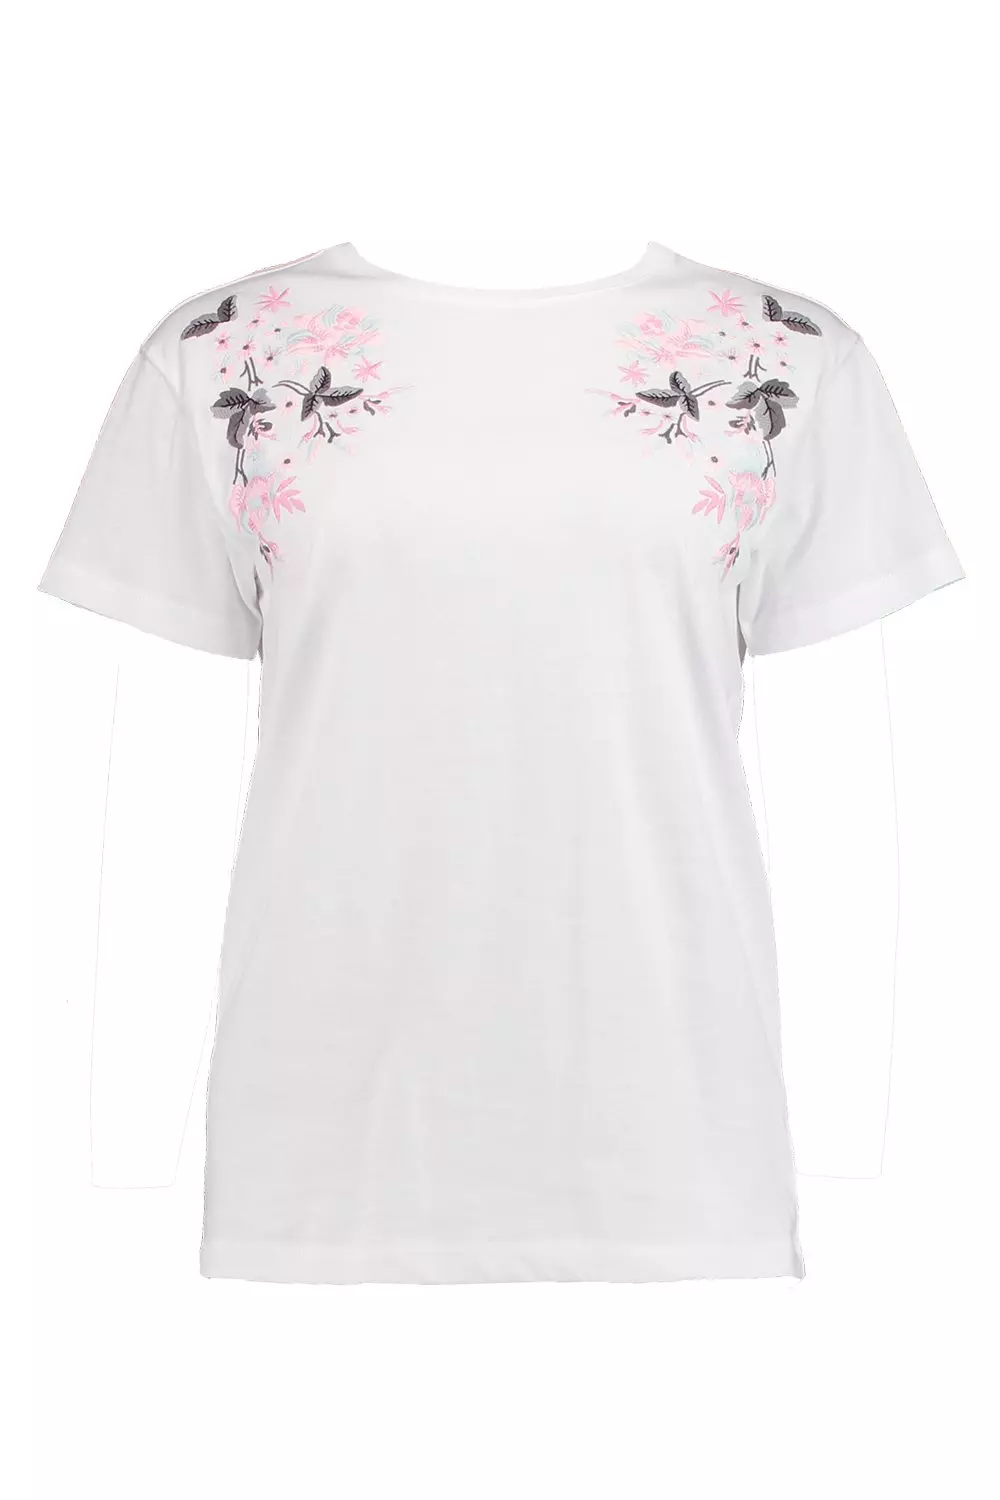 945 Fordi Hej hej Women's Victoria Premium Embroidered Supersoft T-Shirt | Boohoo UK